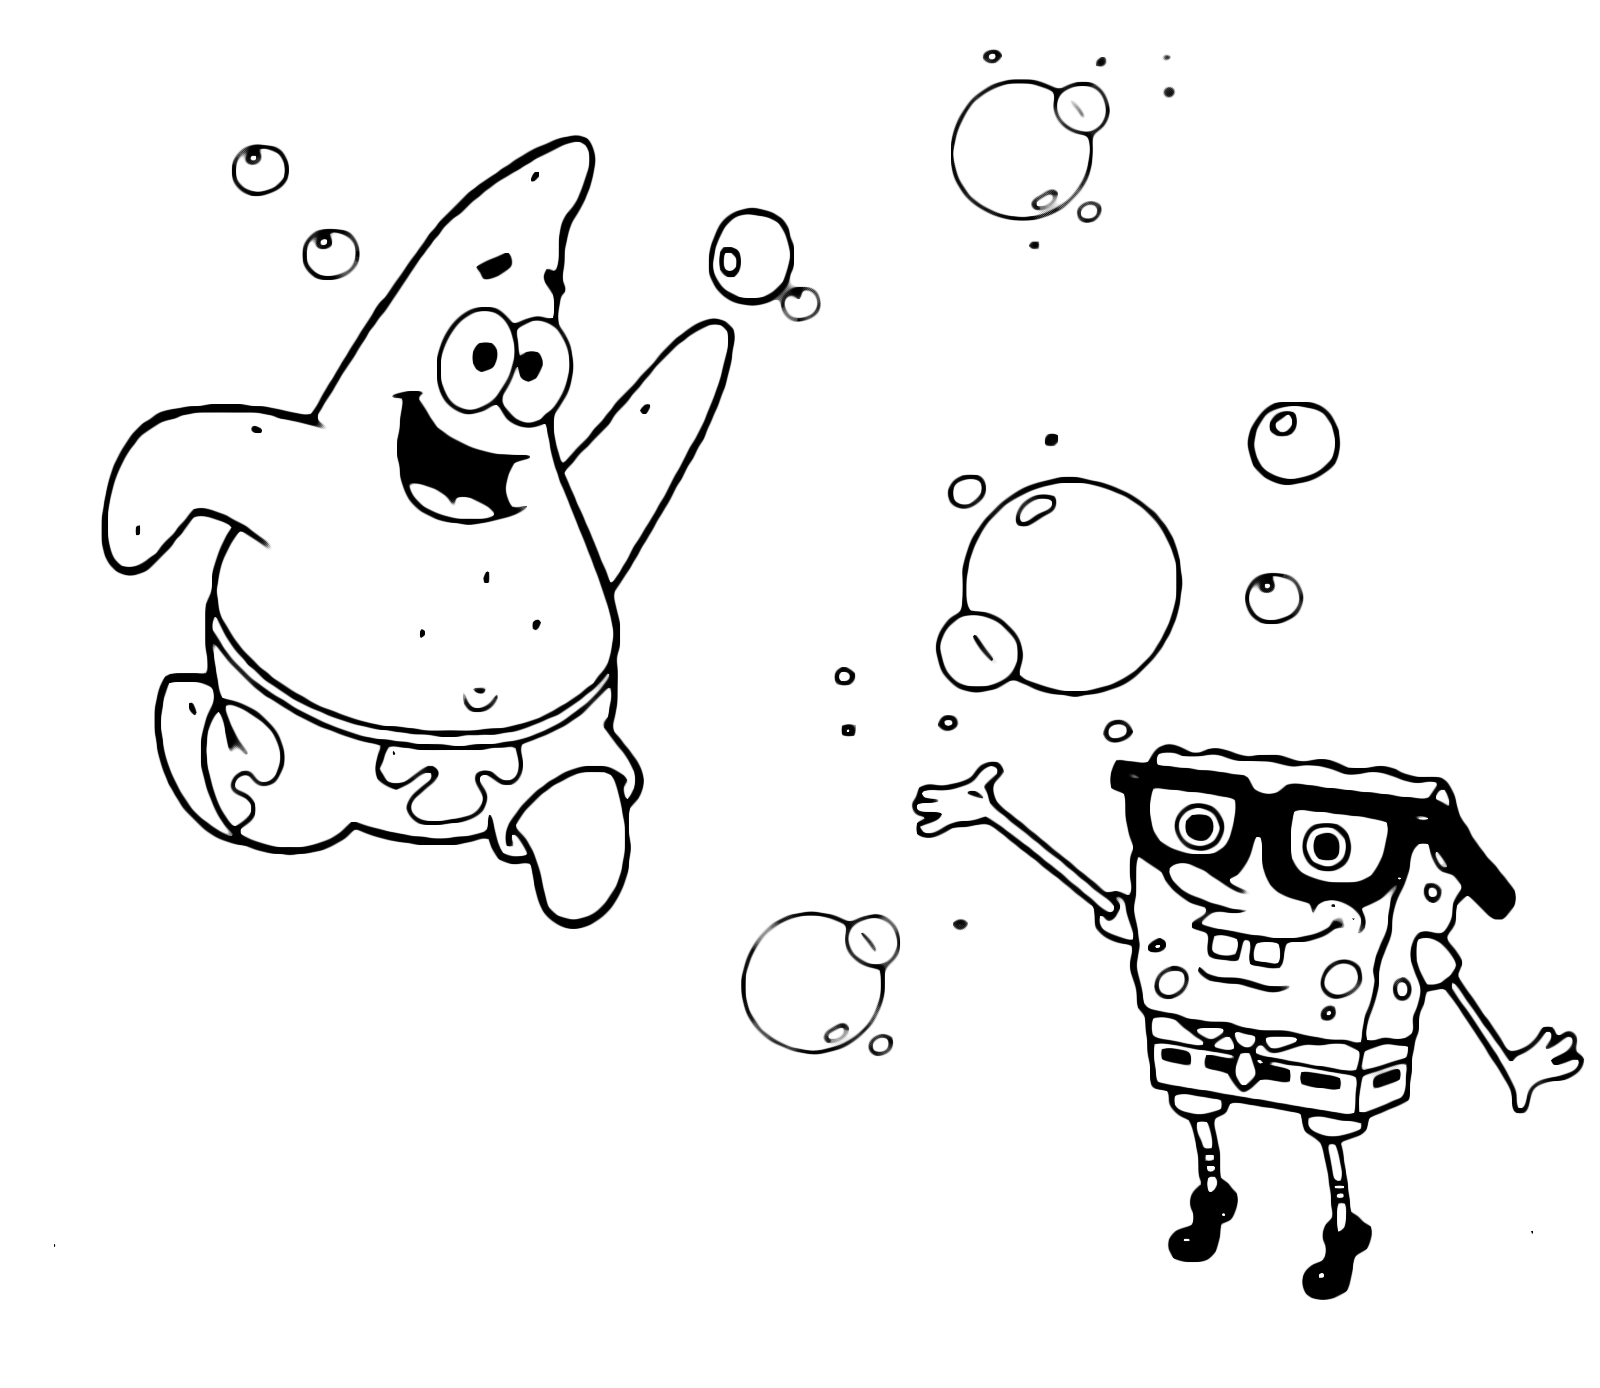 SpongeBob - Patrick Star runs to SpongeBob